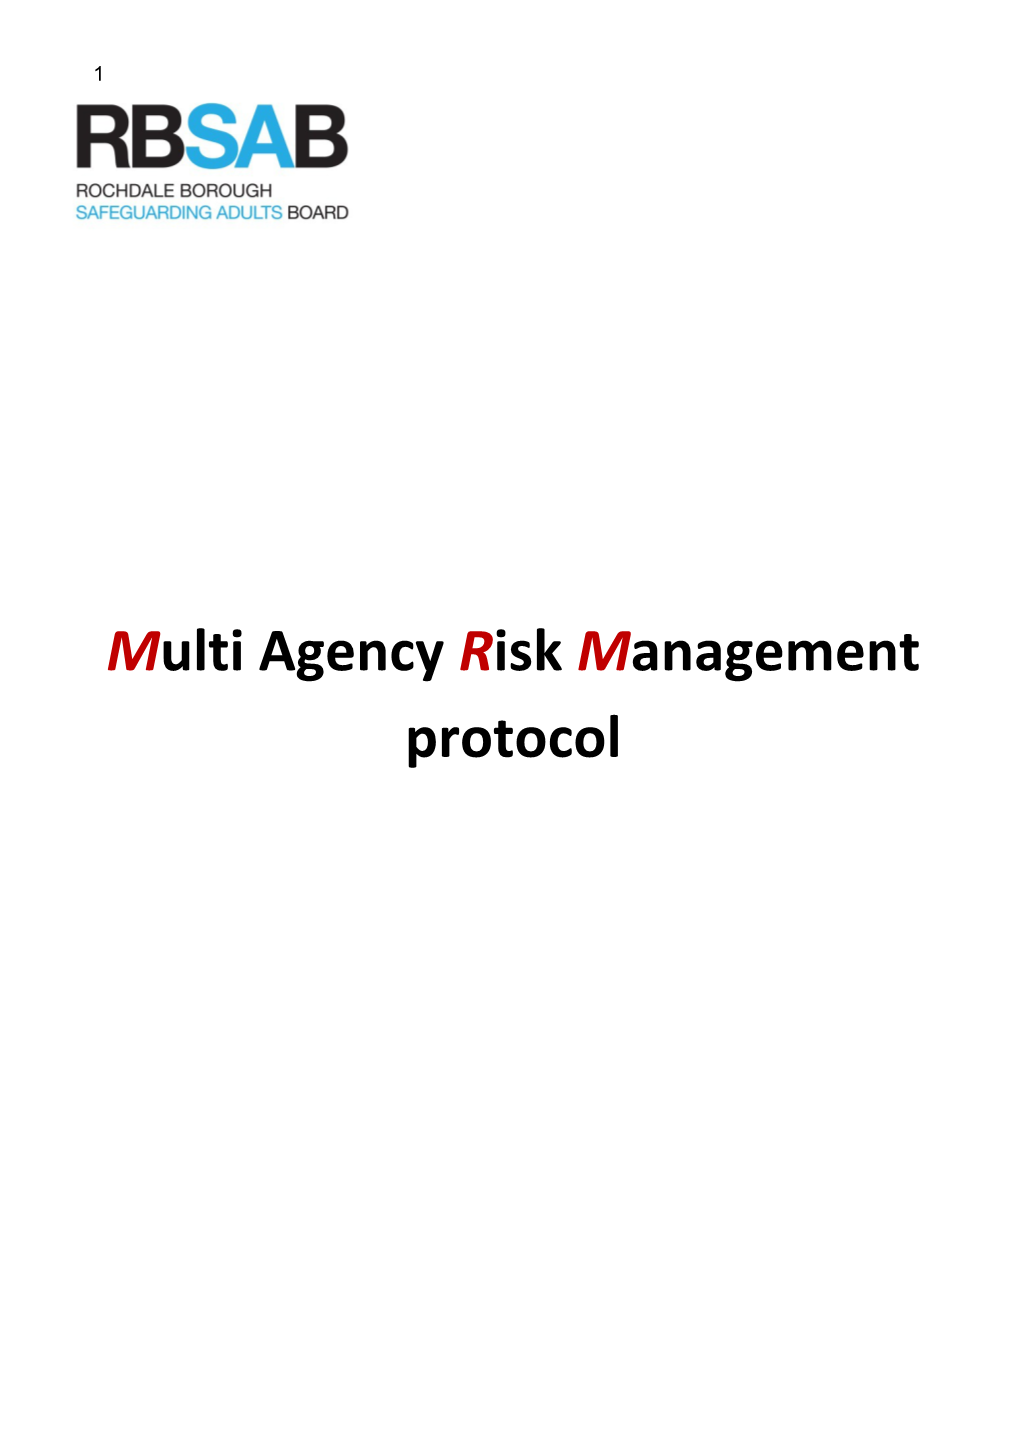 Multi Agencyrisk Management Protocol